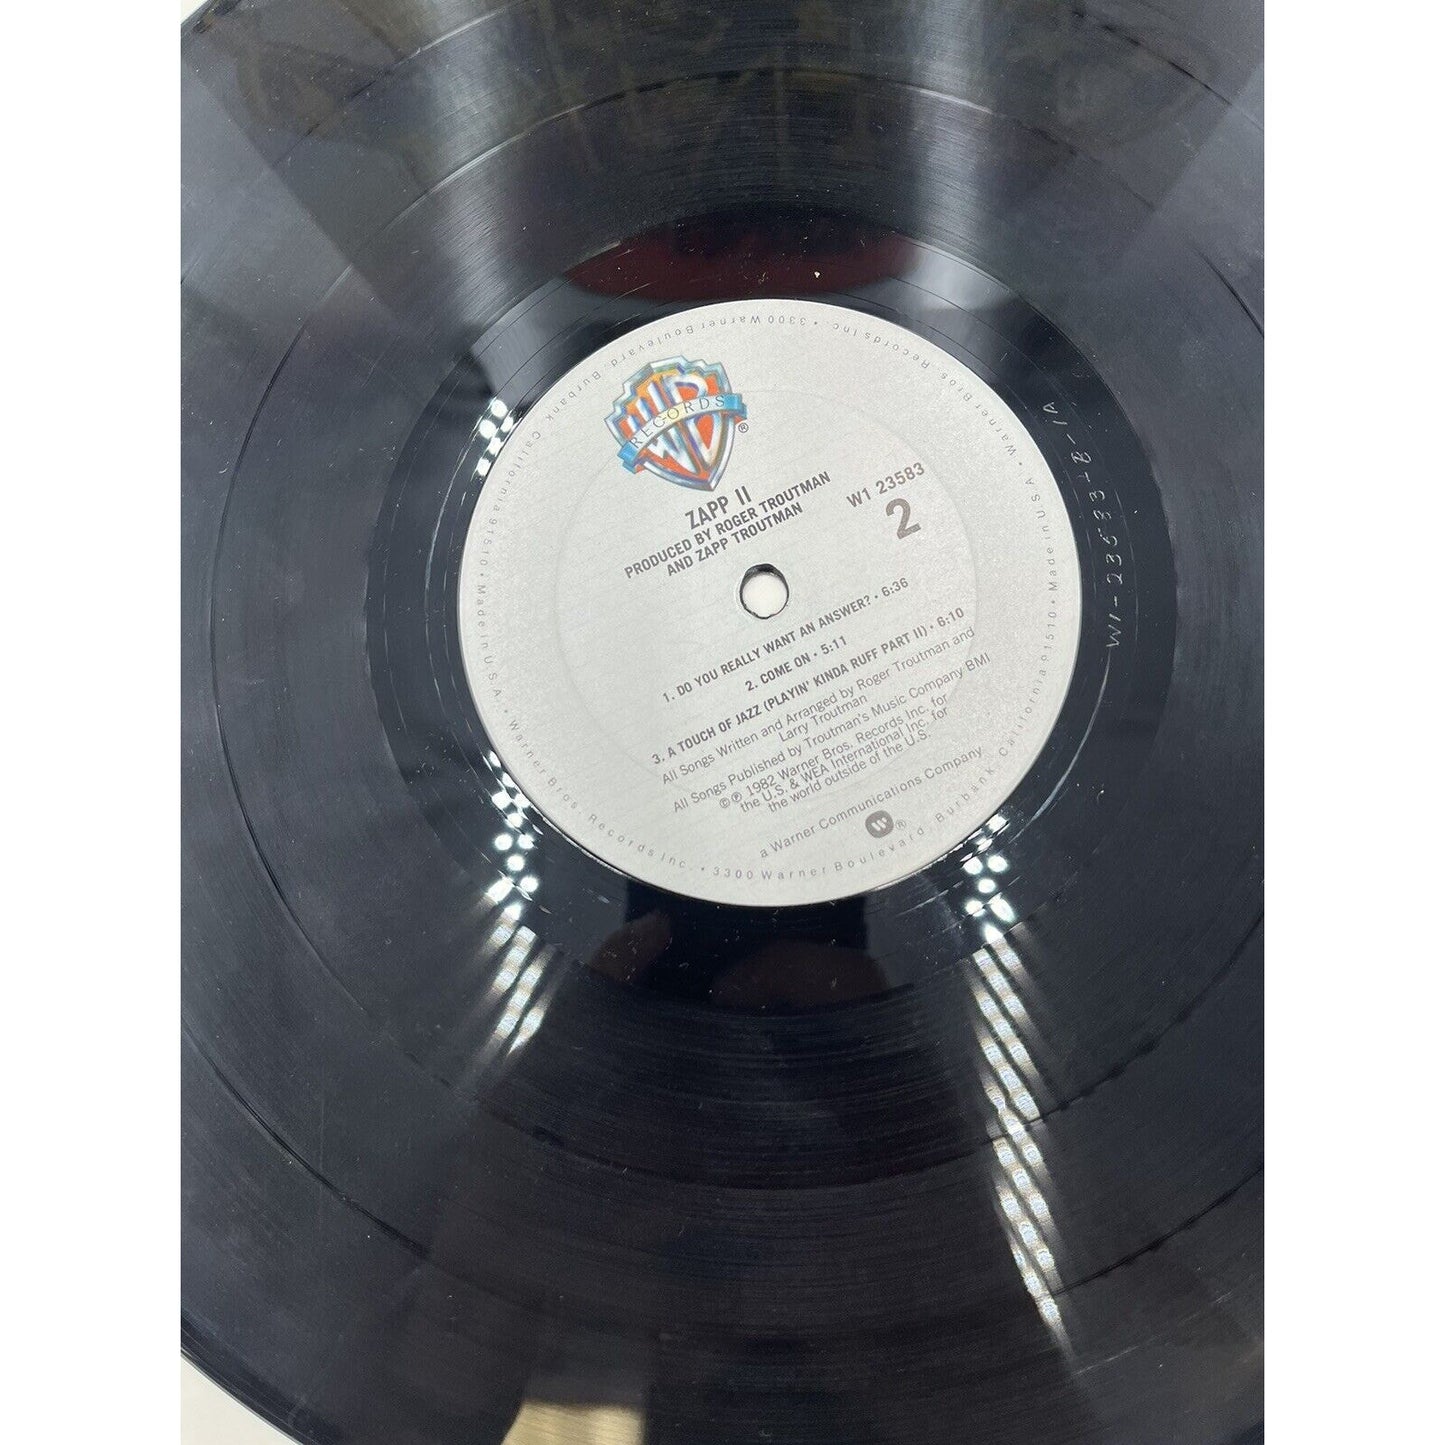 ZAPP II WARNER BROS LP VG+ Vinyl record Free Shipping